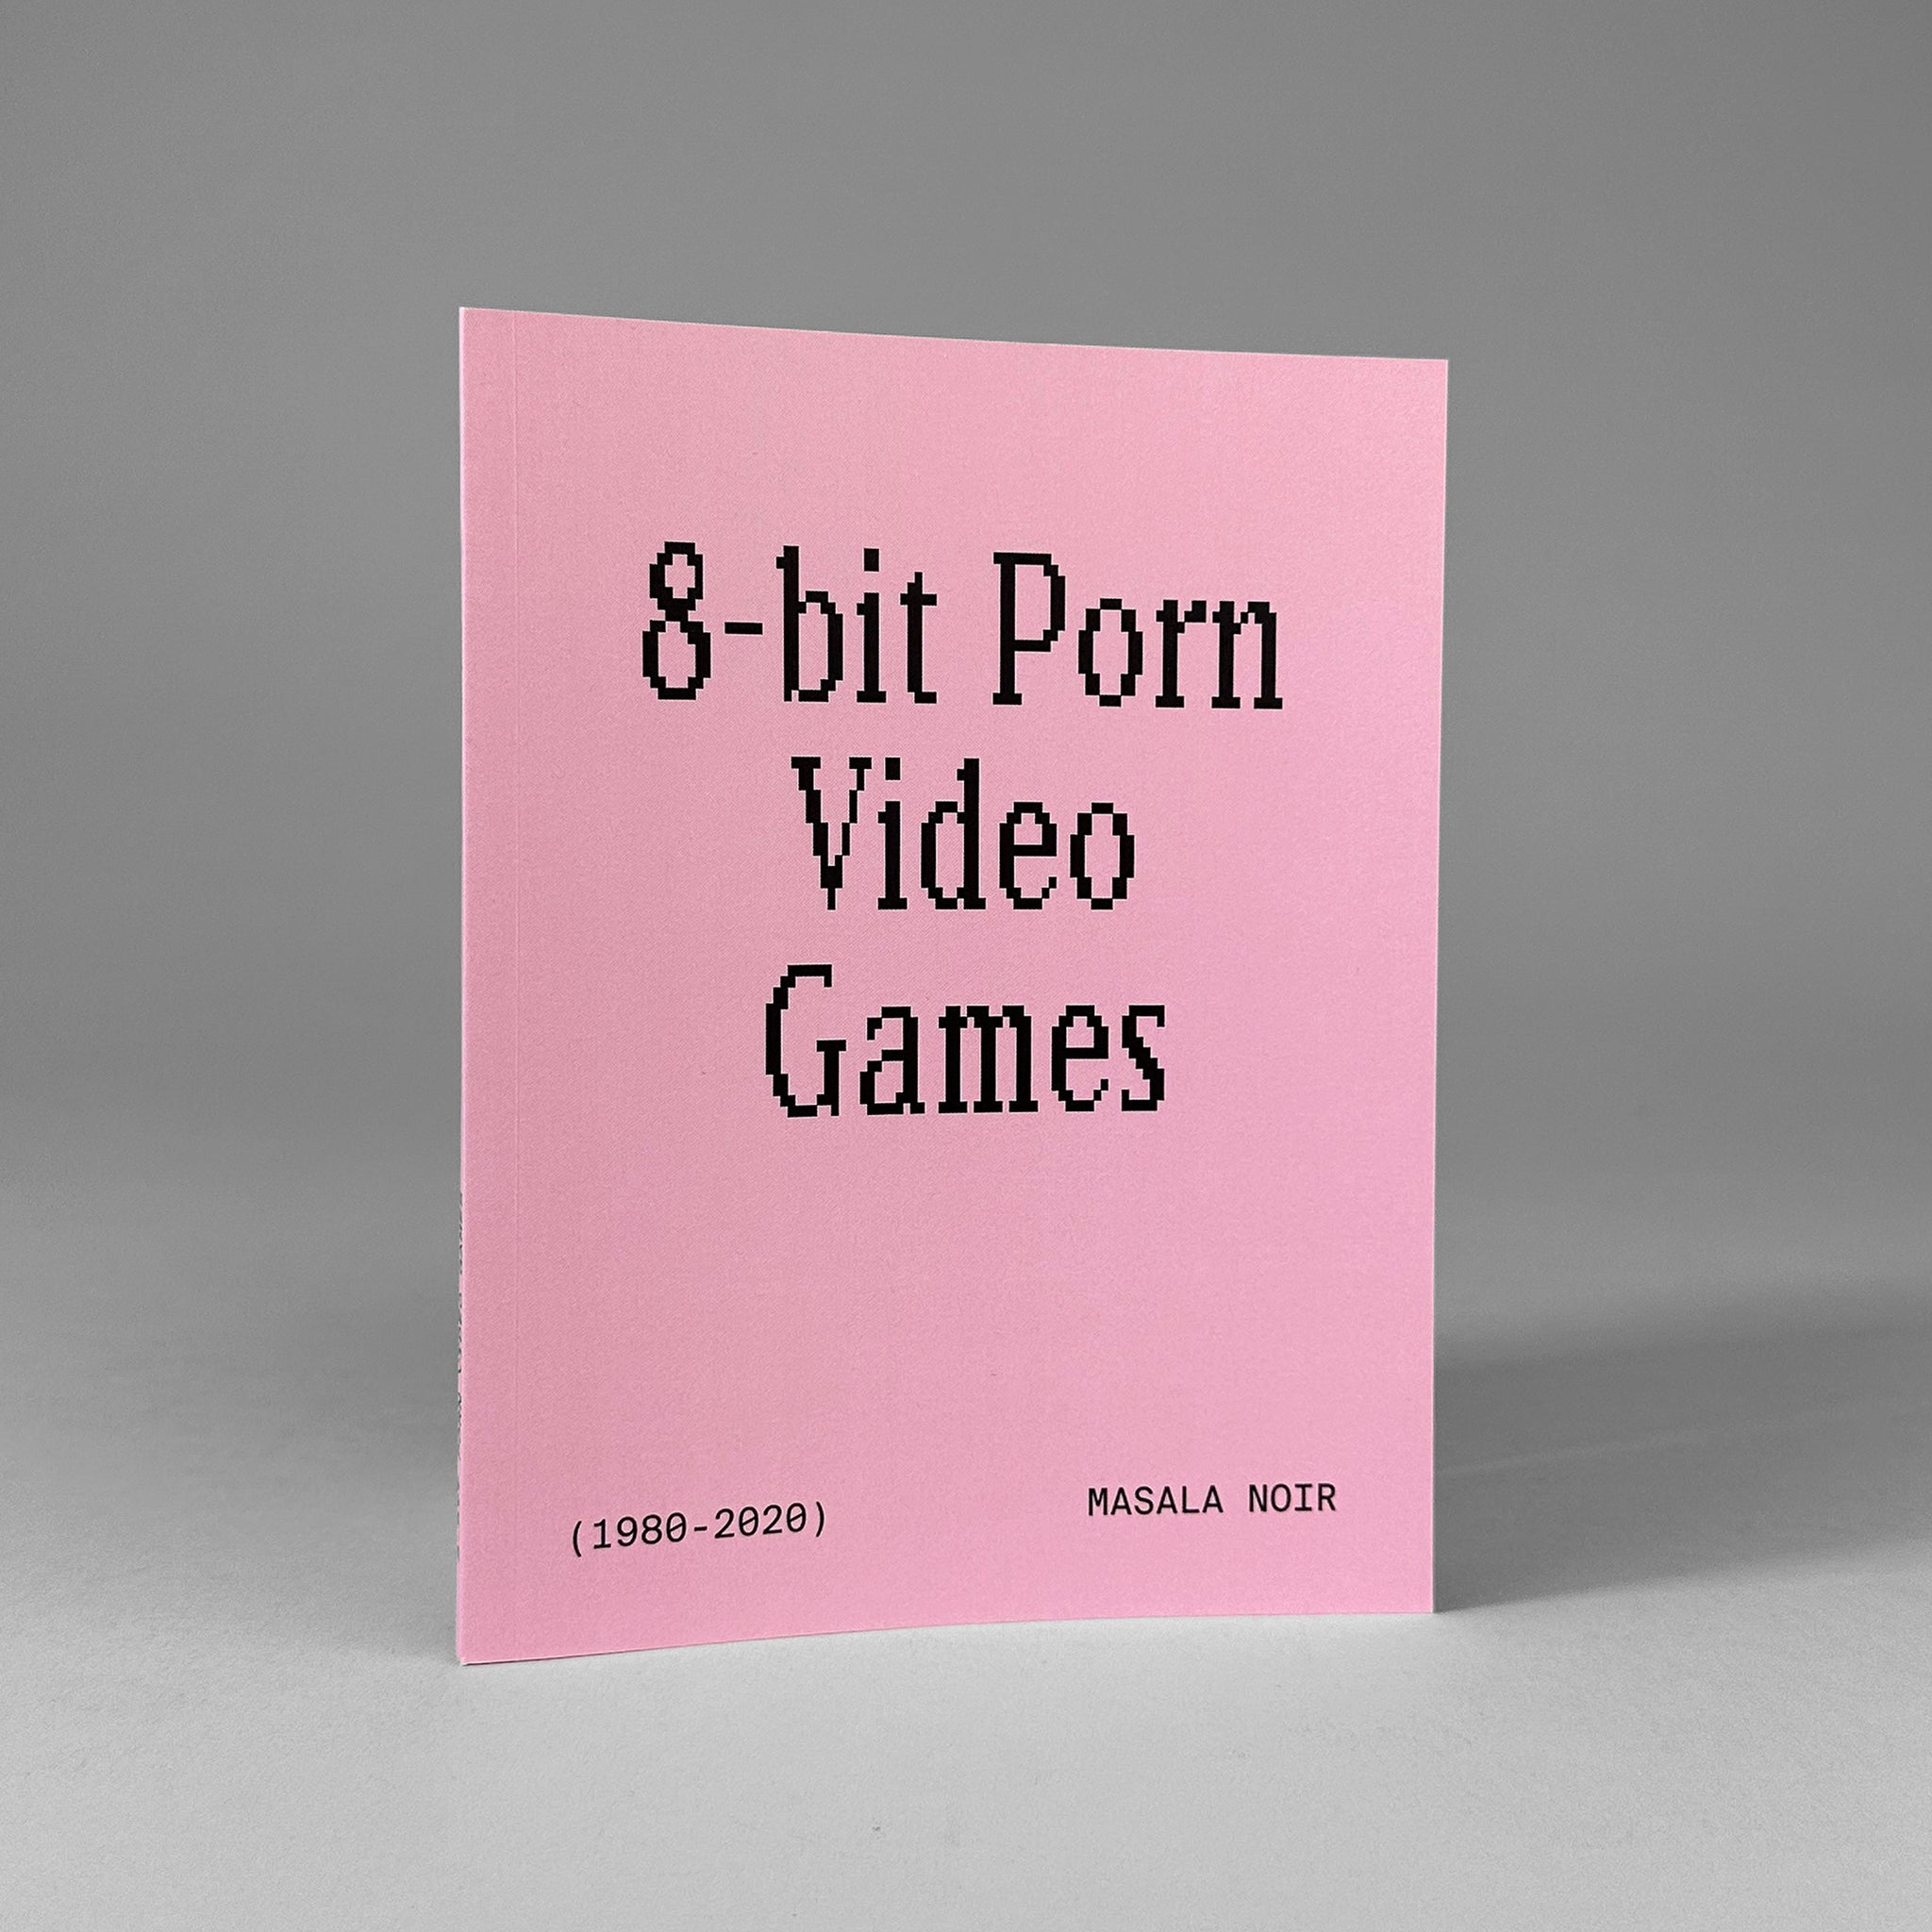 8-bit Porn Video Games (1980-2020)